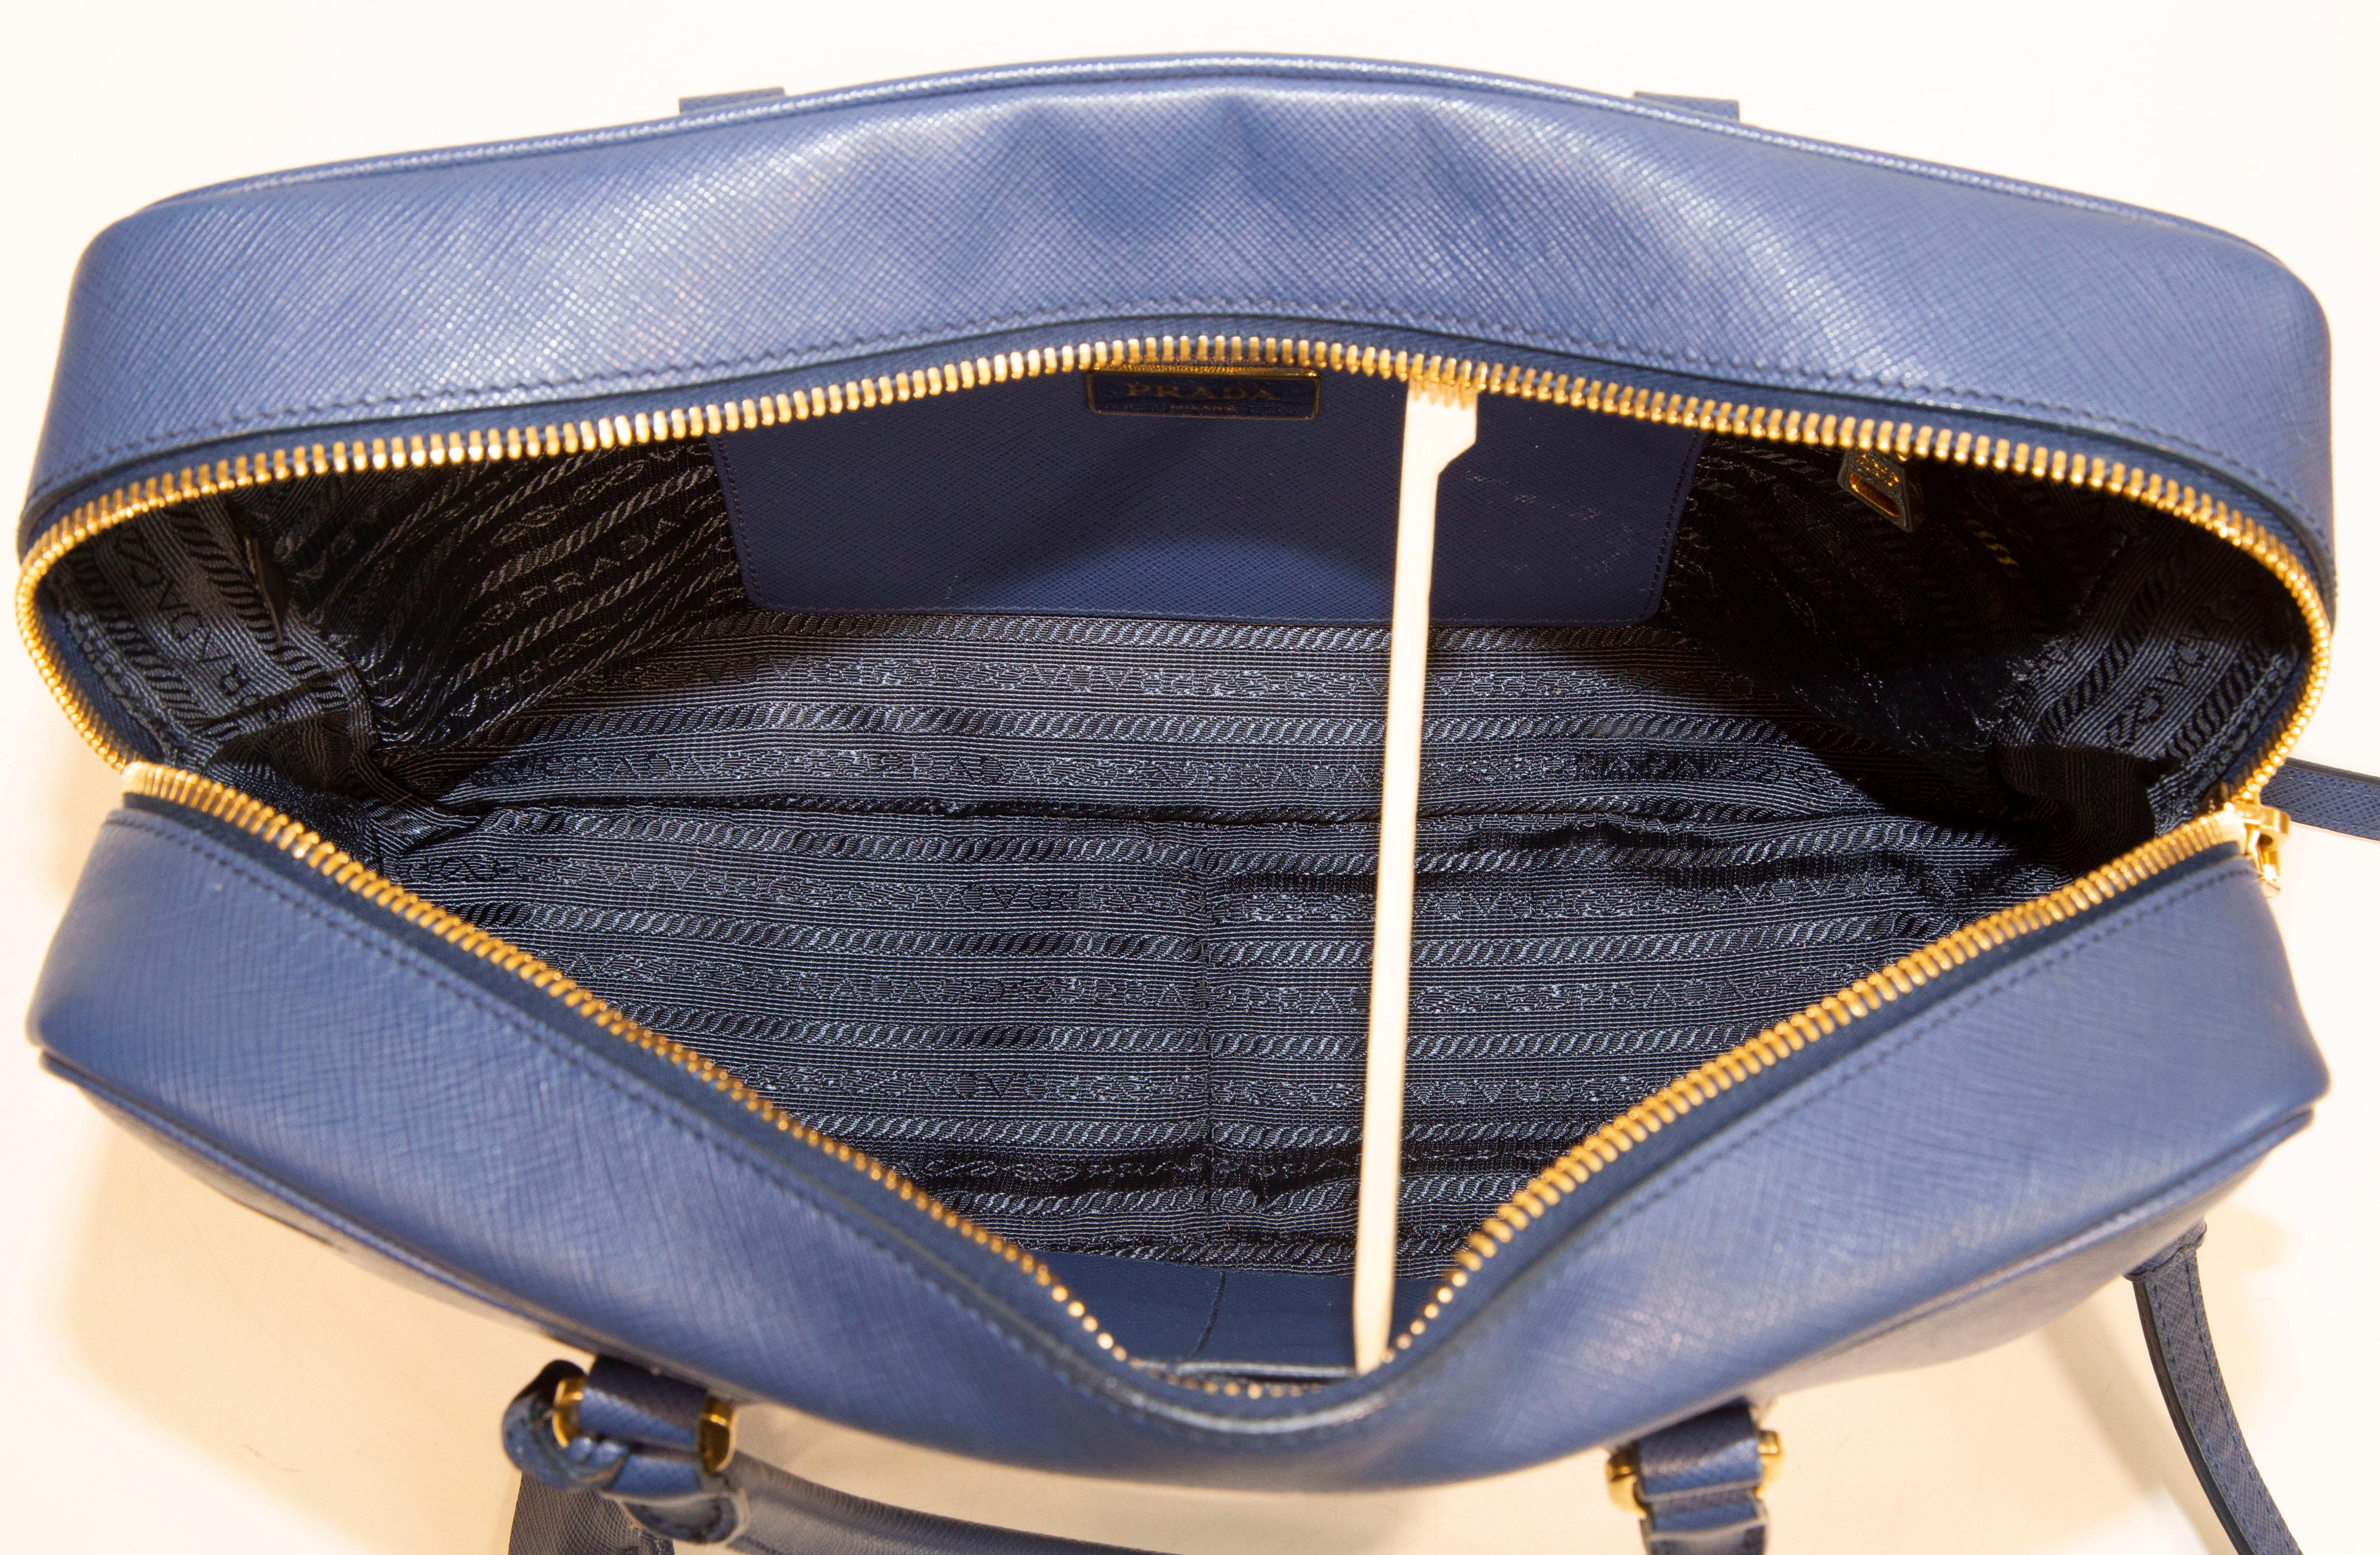  Prada Galleria Two Way Bag in Blue Saffiano Leather 13